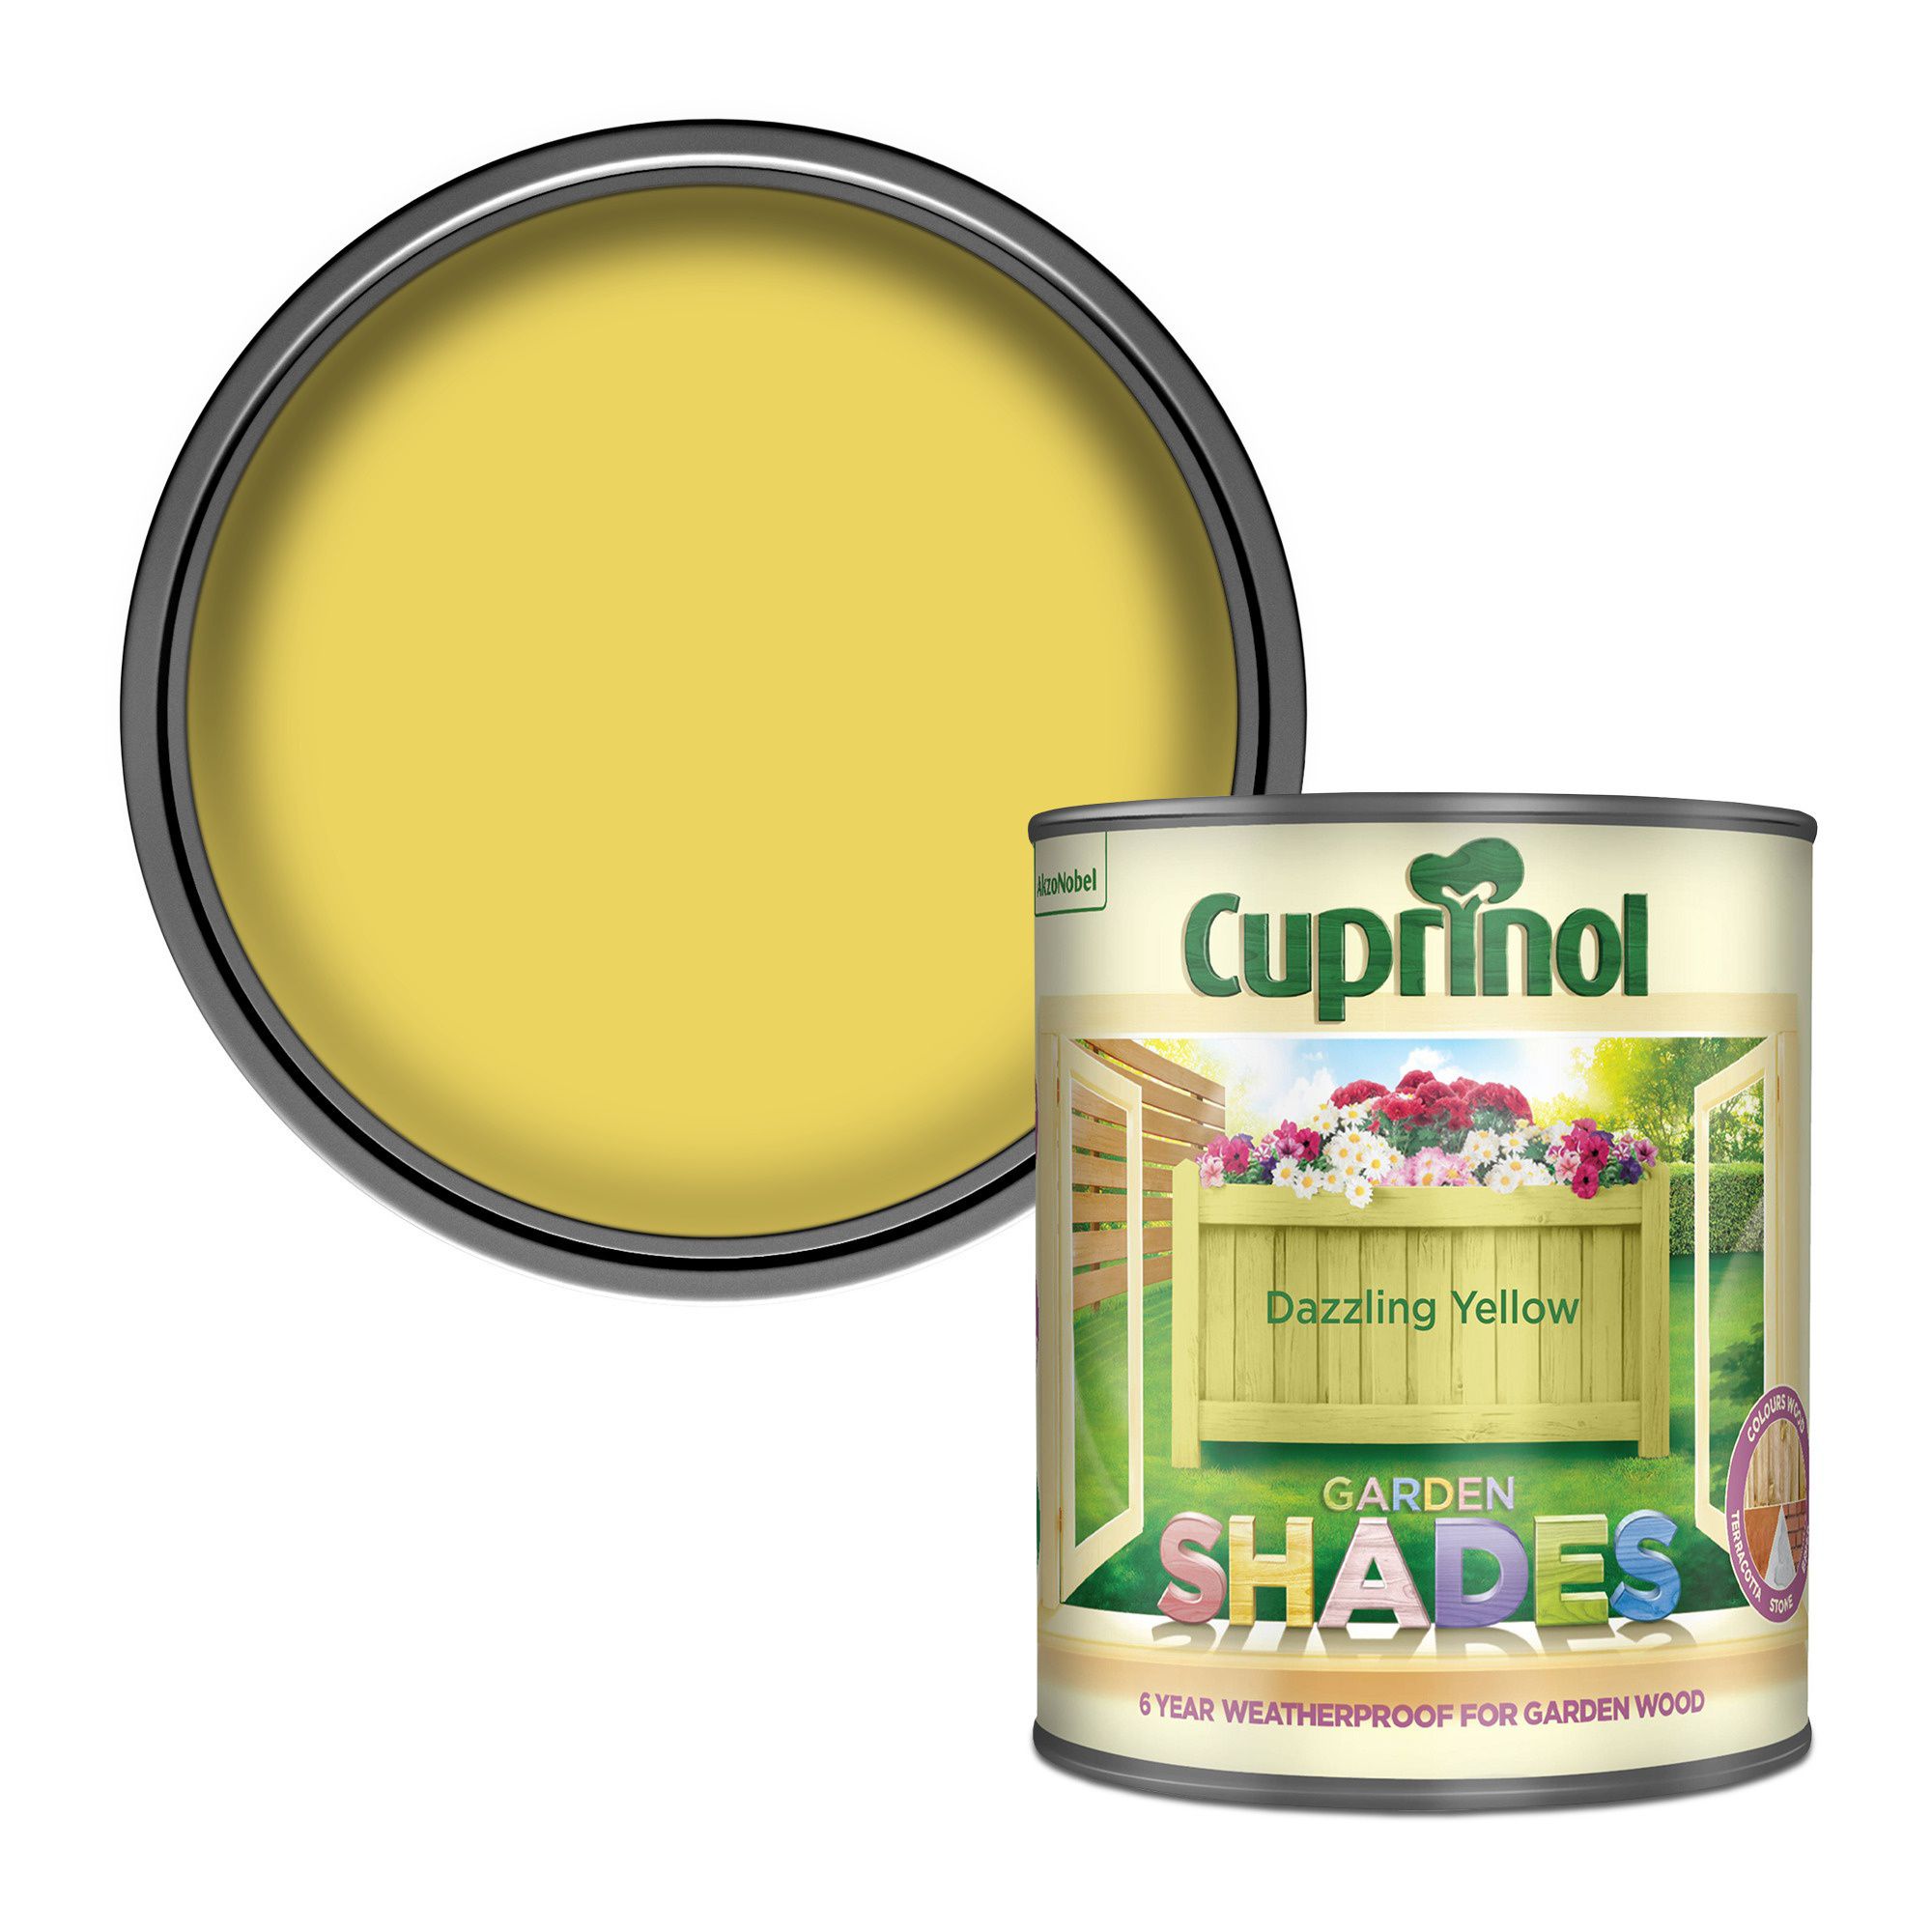 Cuprinol Garden shades Dazzling yellow Matt Multi-surface Exterior Wood paint, 1L Tin